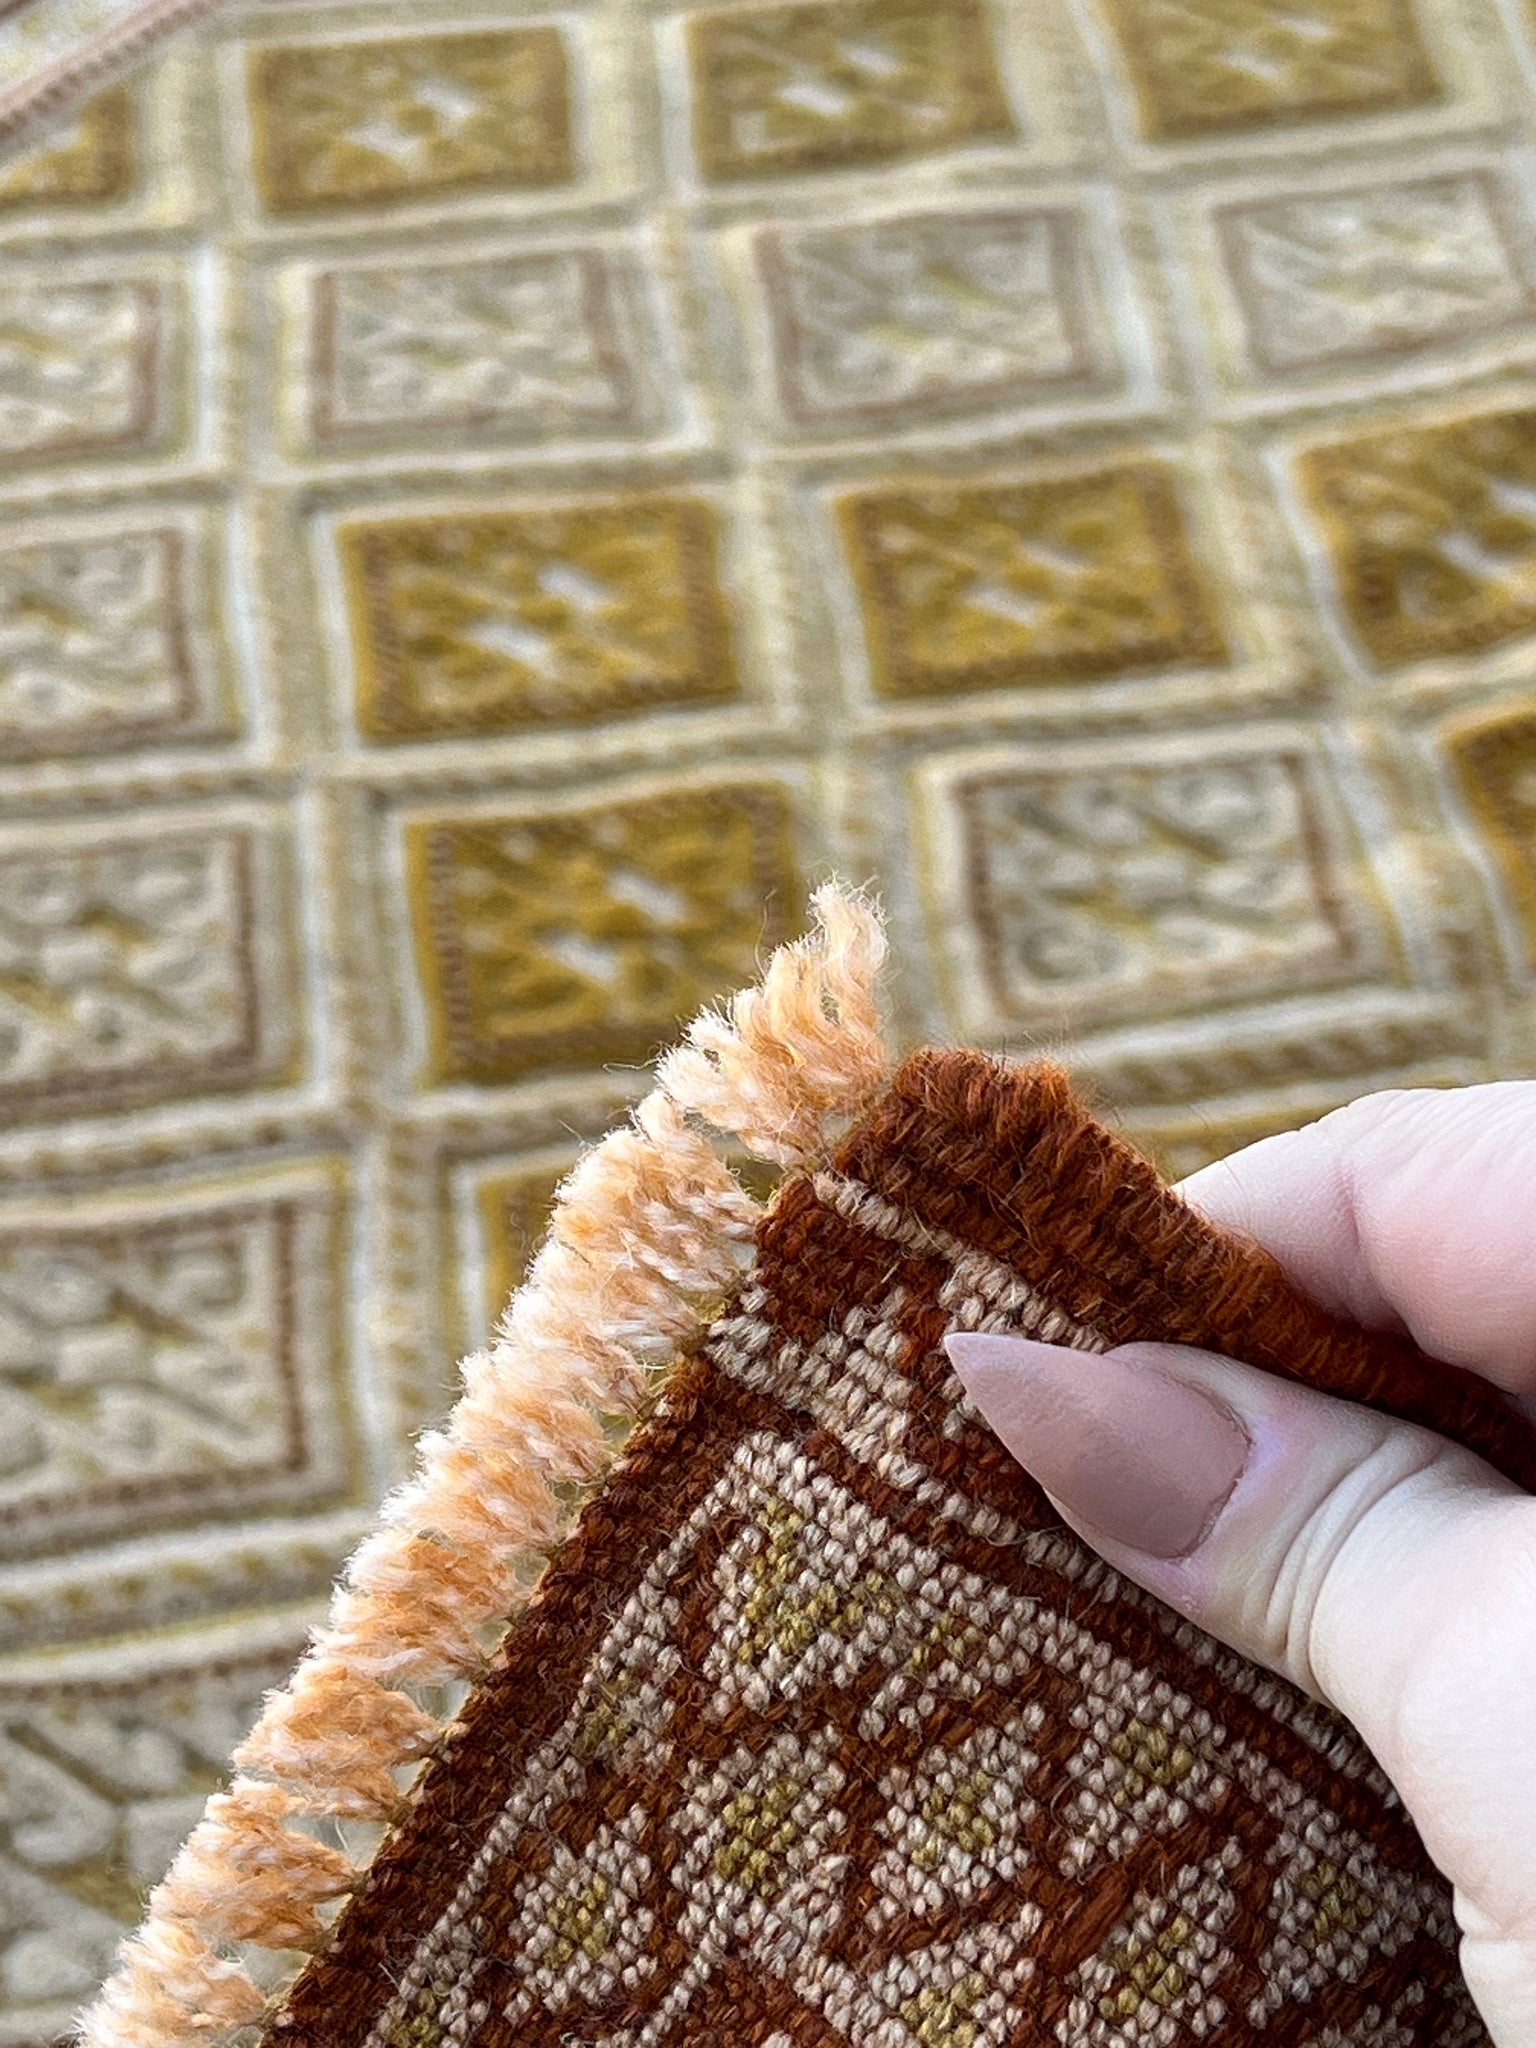 5x7 (150x215) Handmade Afghan Rug | Taupe Chocolate Brown Golden Yellow Cream Beige Tan | Hand Knotted Geometric Persian Wool Boho Tribal